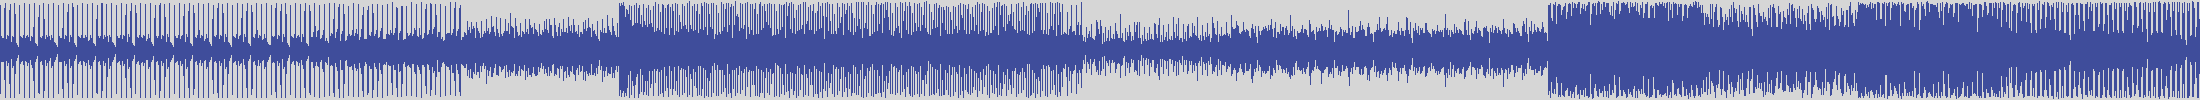 nf_boyz_records [NFY019] Irina Pharm - C.I.A. [Exclusive Mix] audio wave form